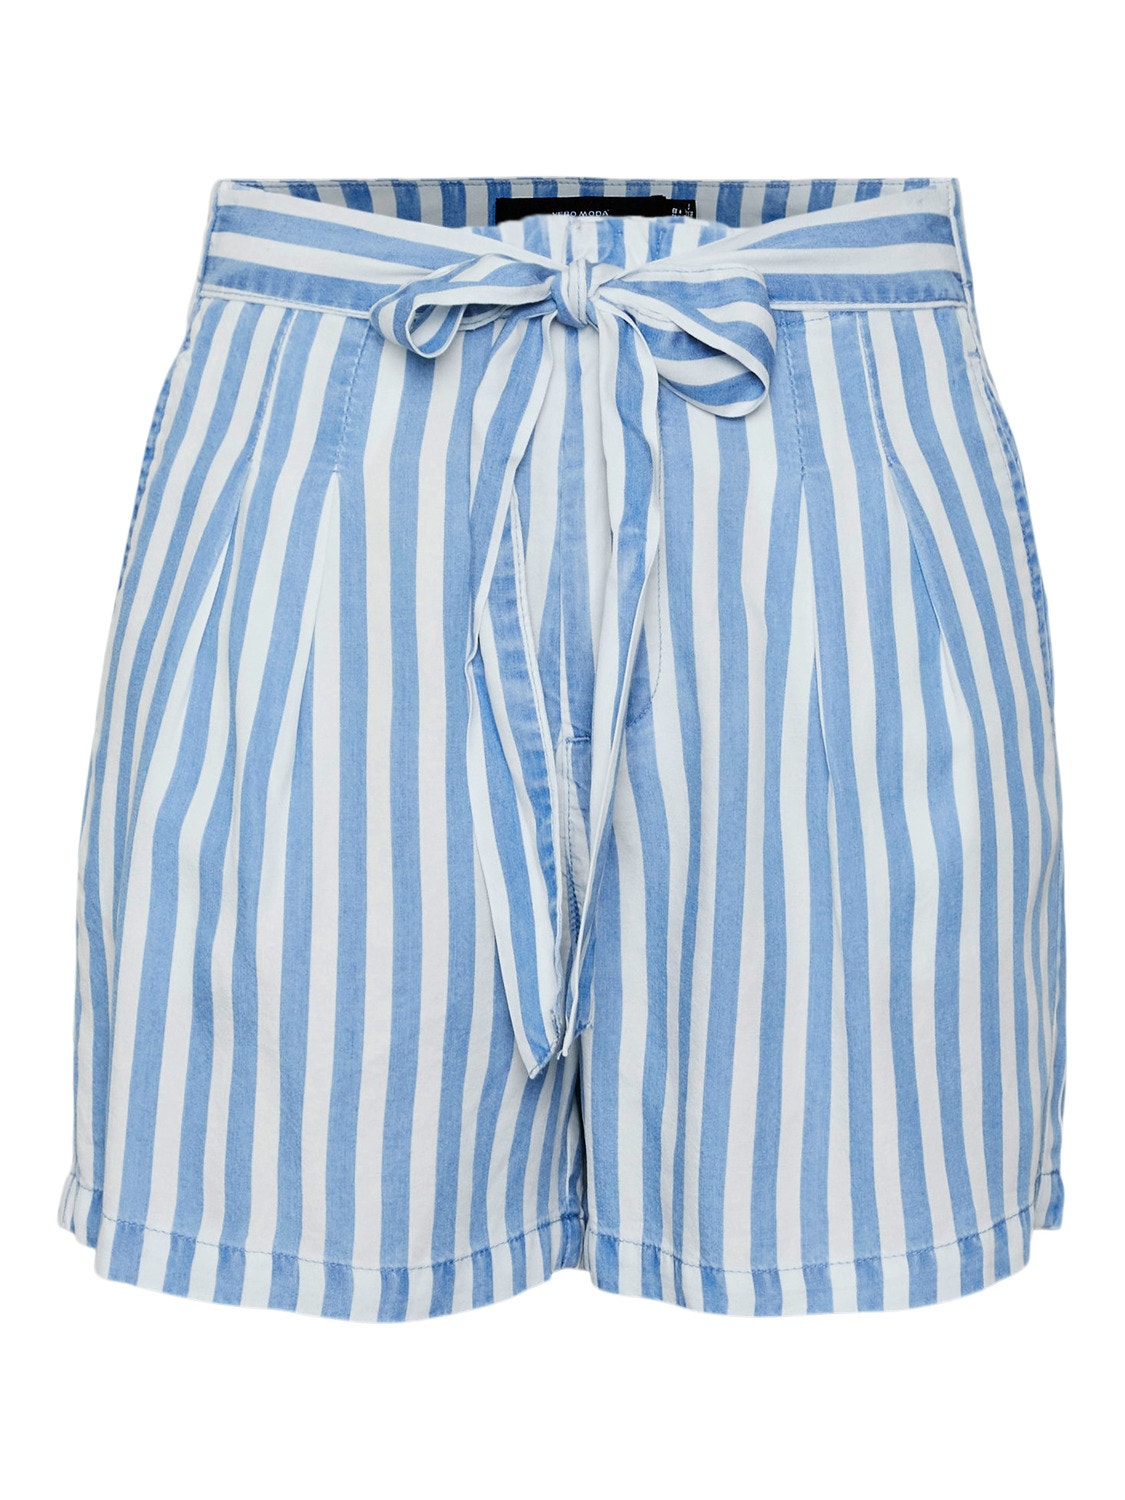 Vero Moda VMMIA Shorts -Light Blue Denim - 10209543